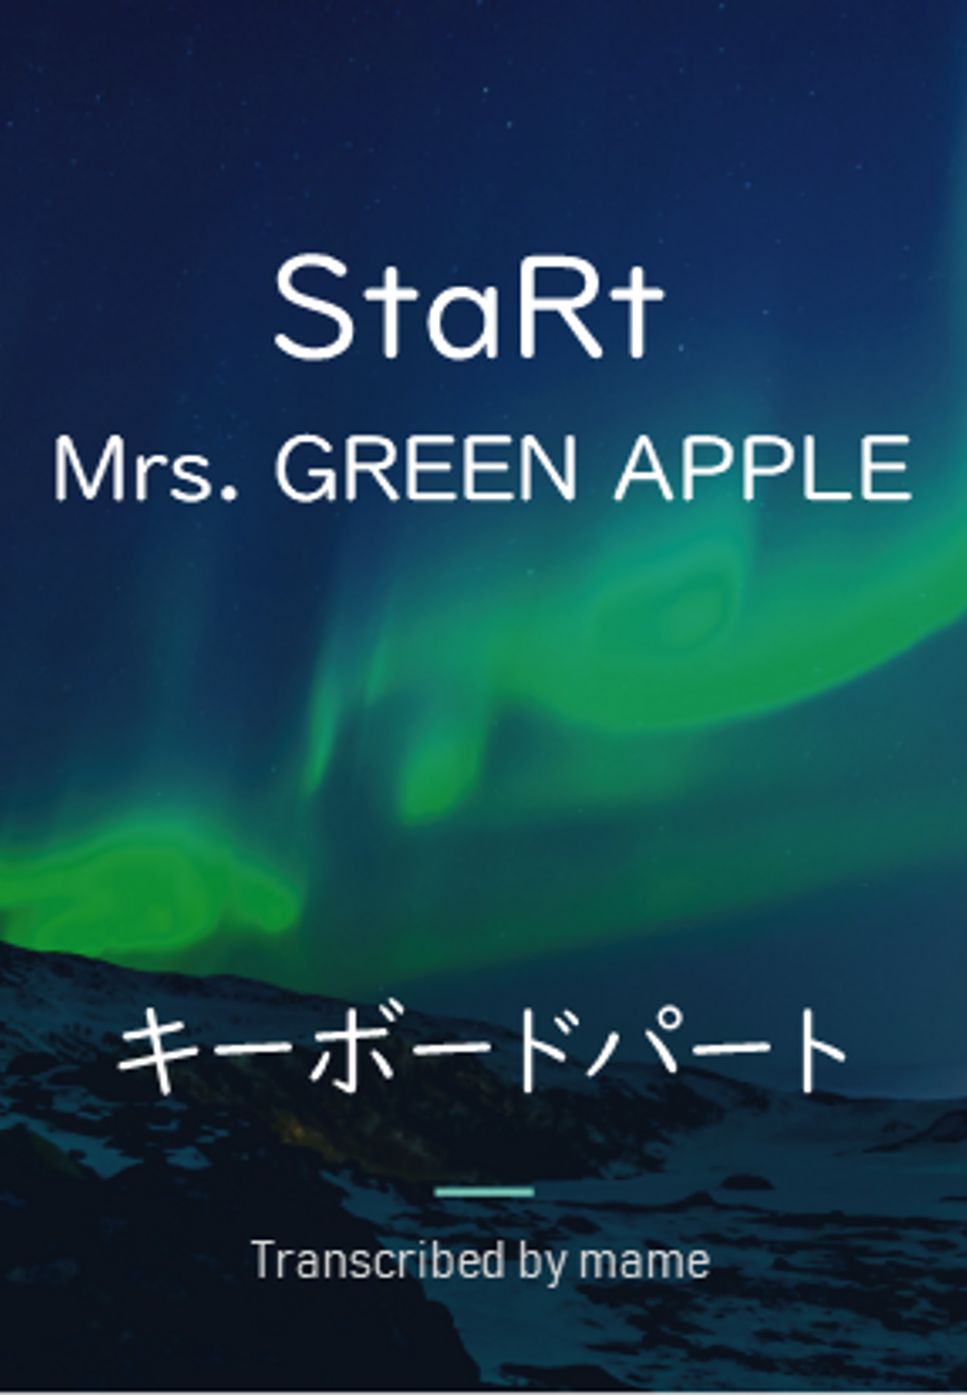 Mrs. GREEN APPLE - StaRt (keyboard part) by mame